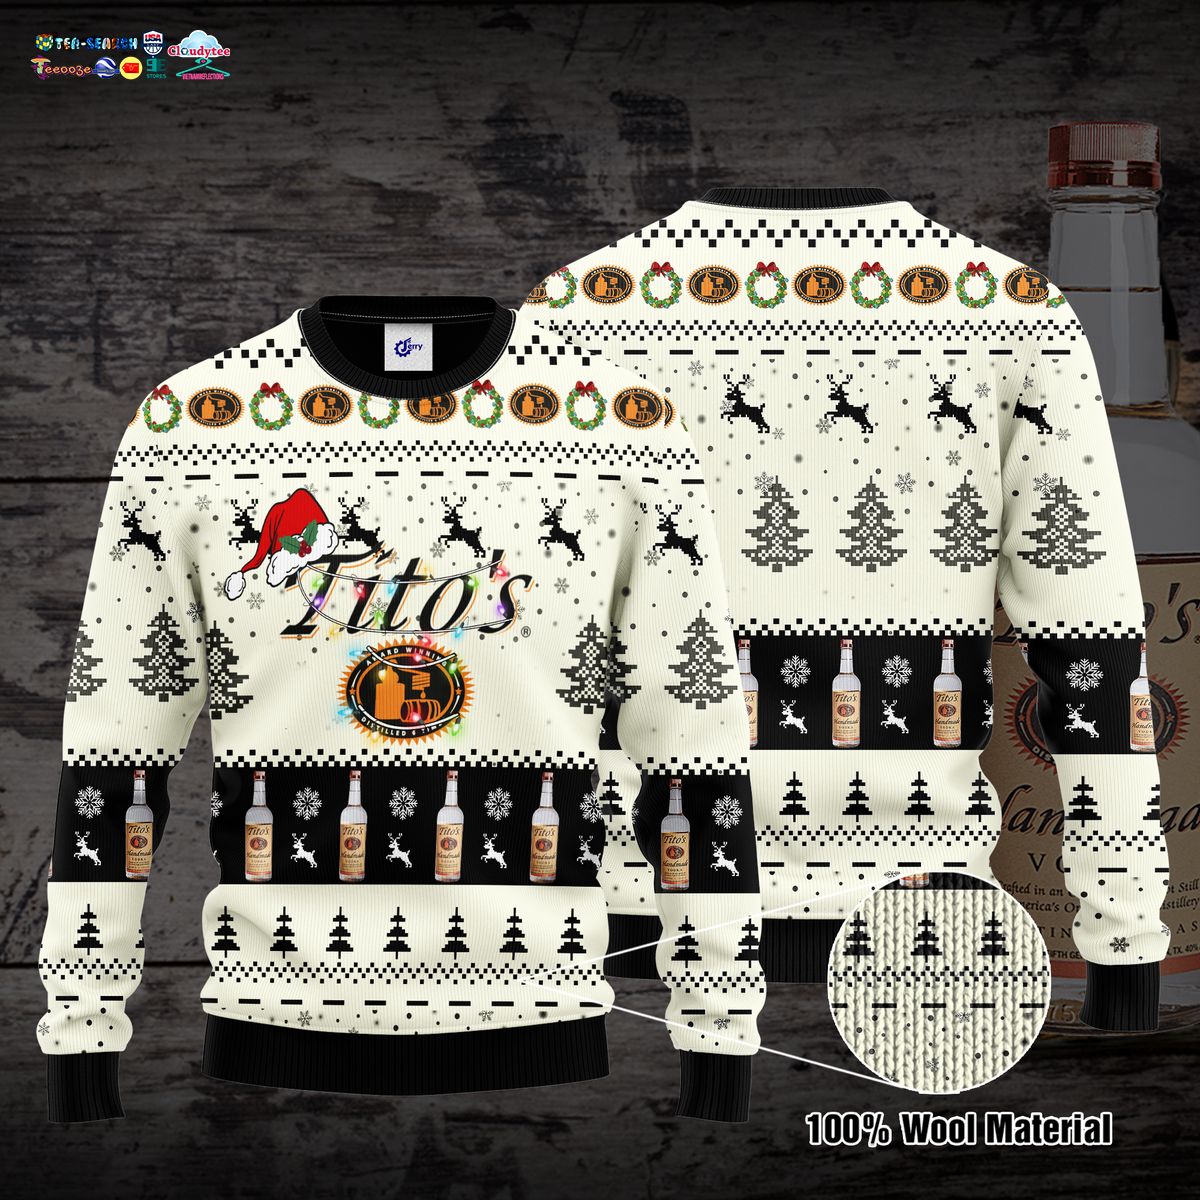 Tito’s Handmade Vodka Santa Hat Ugly Christmas Sweater